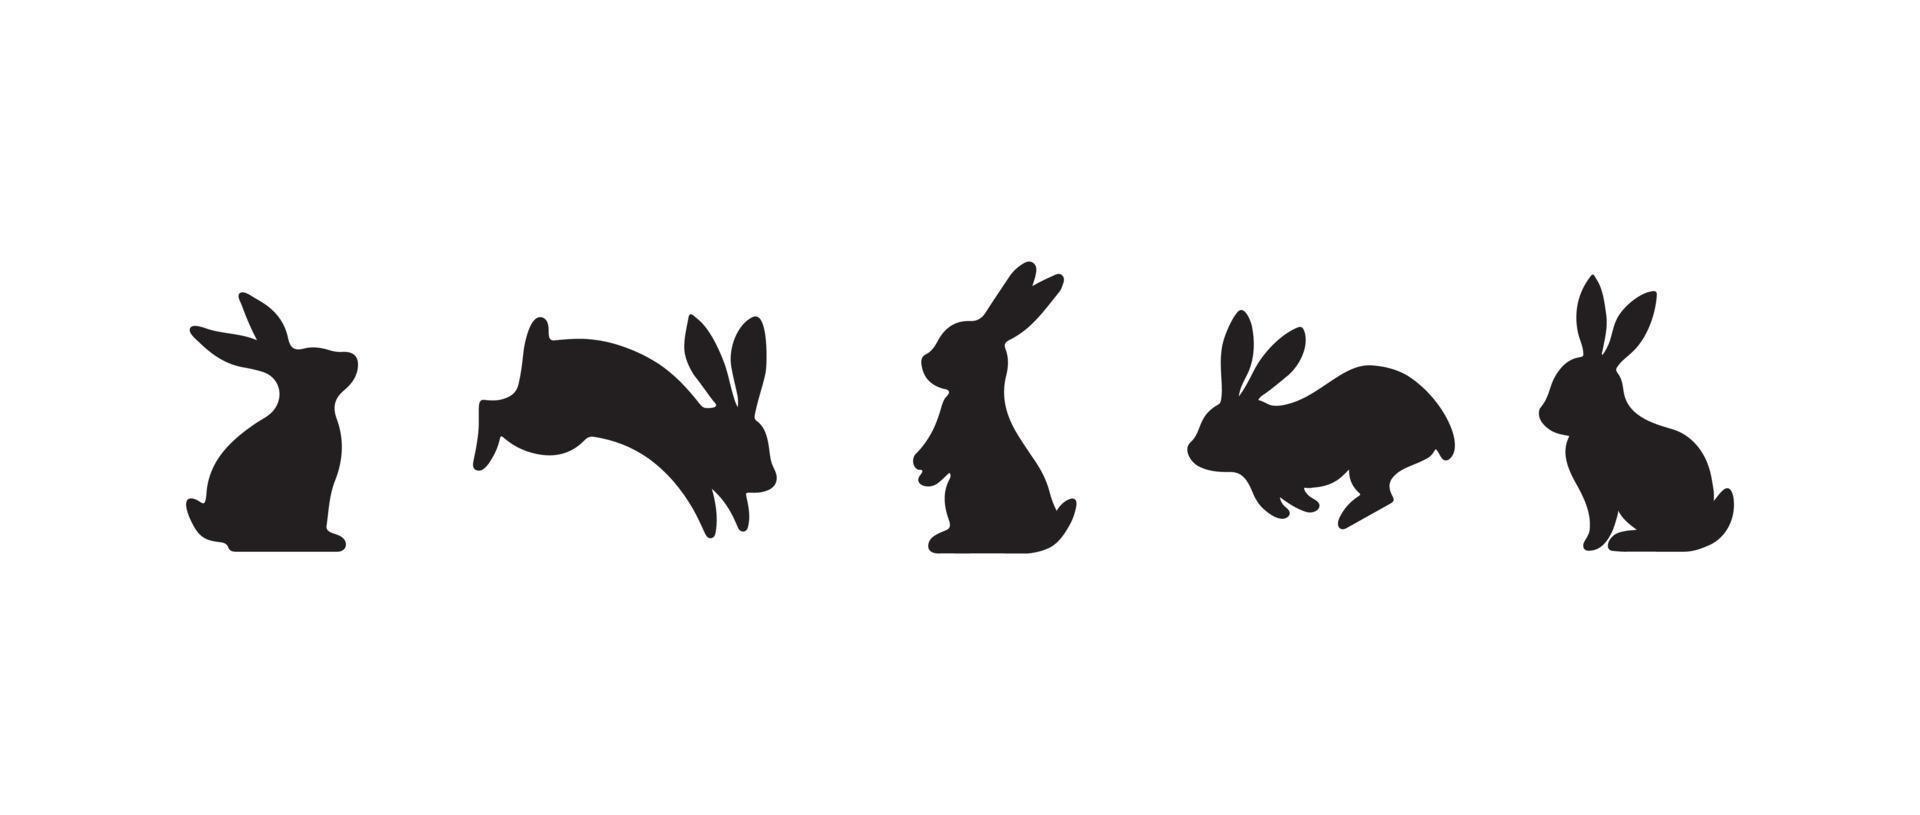 Rabbit Silhouette Illustrations vector